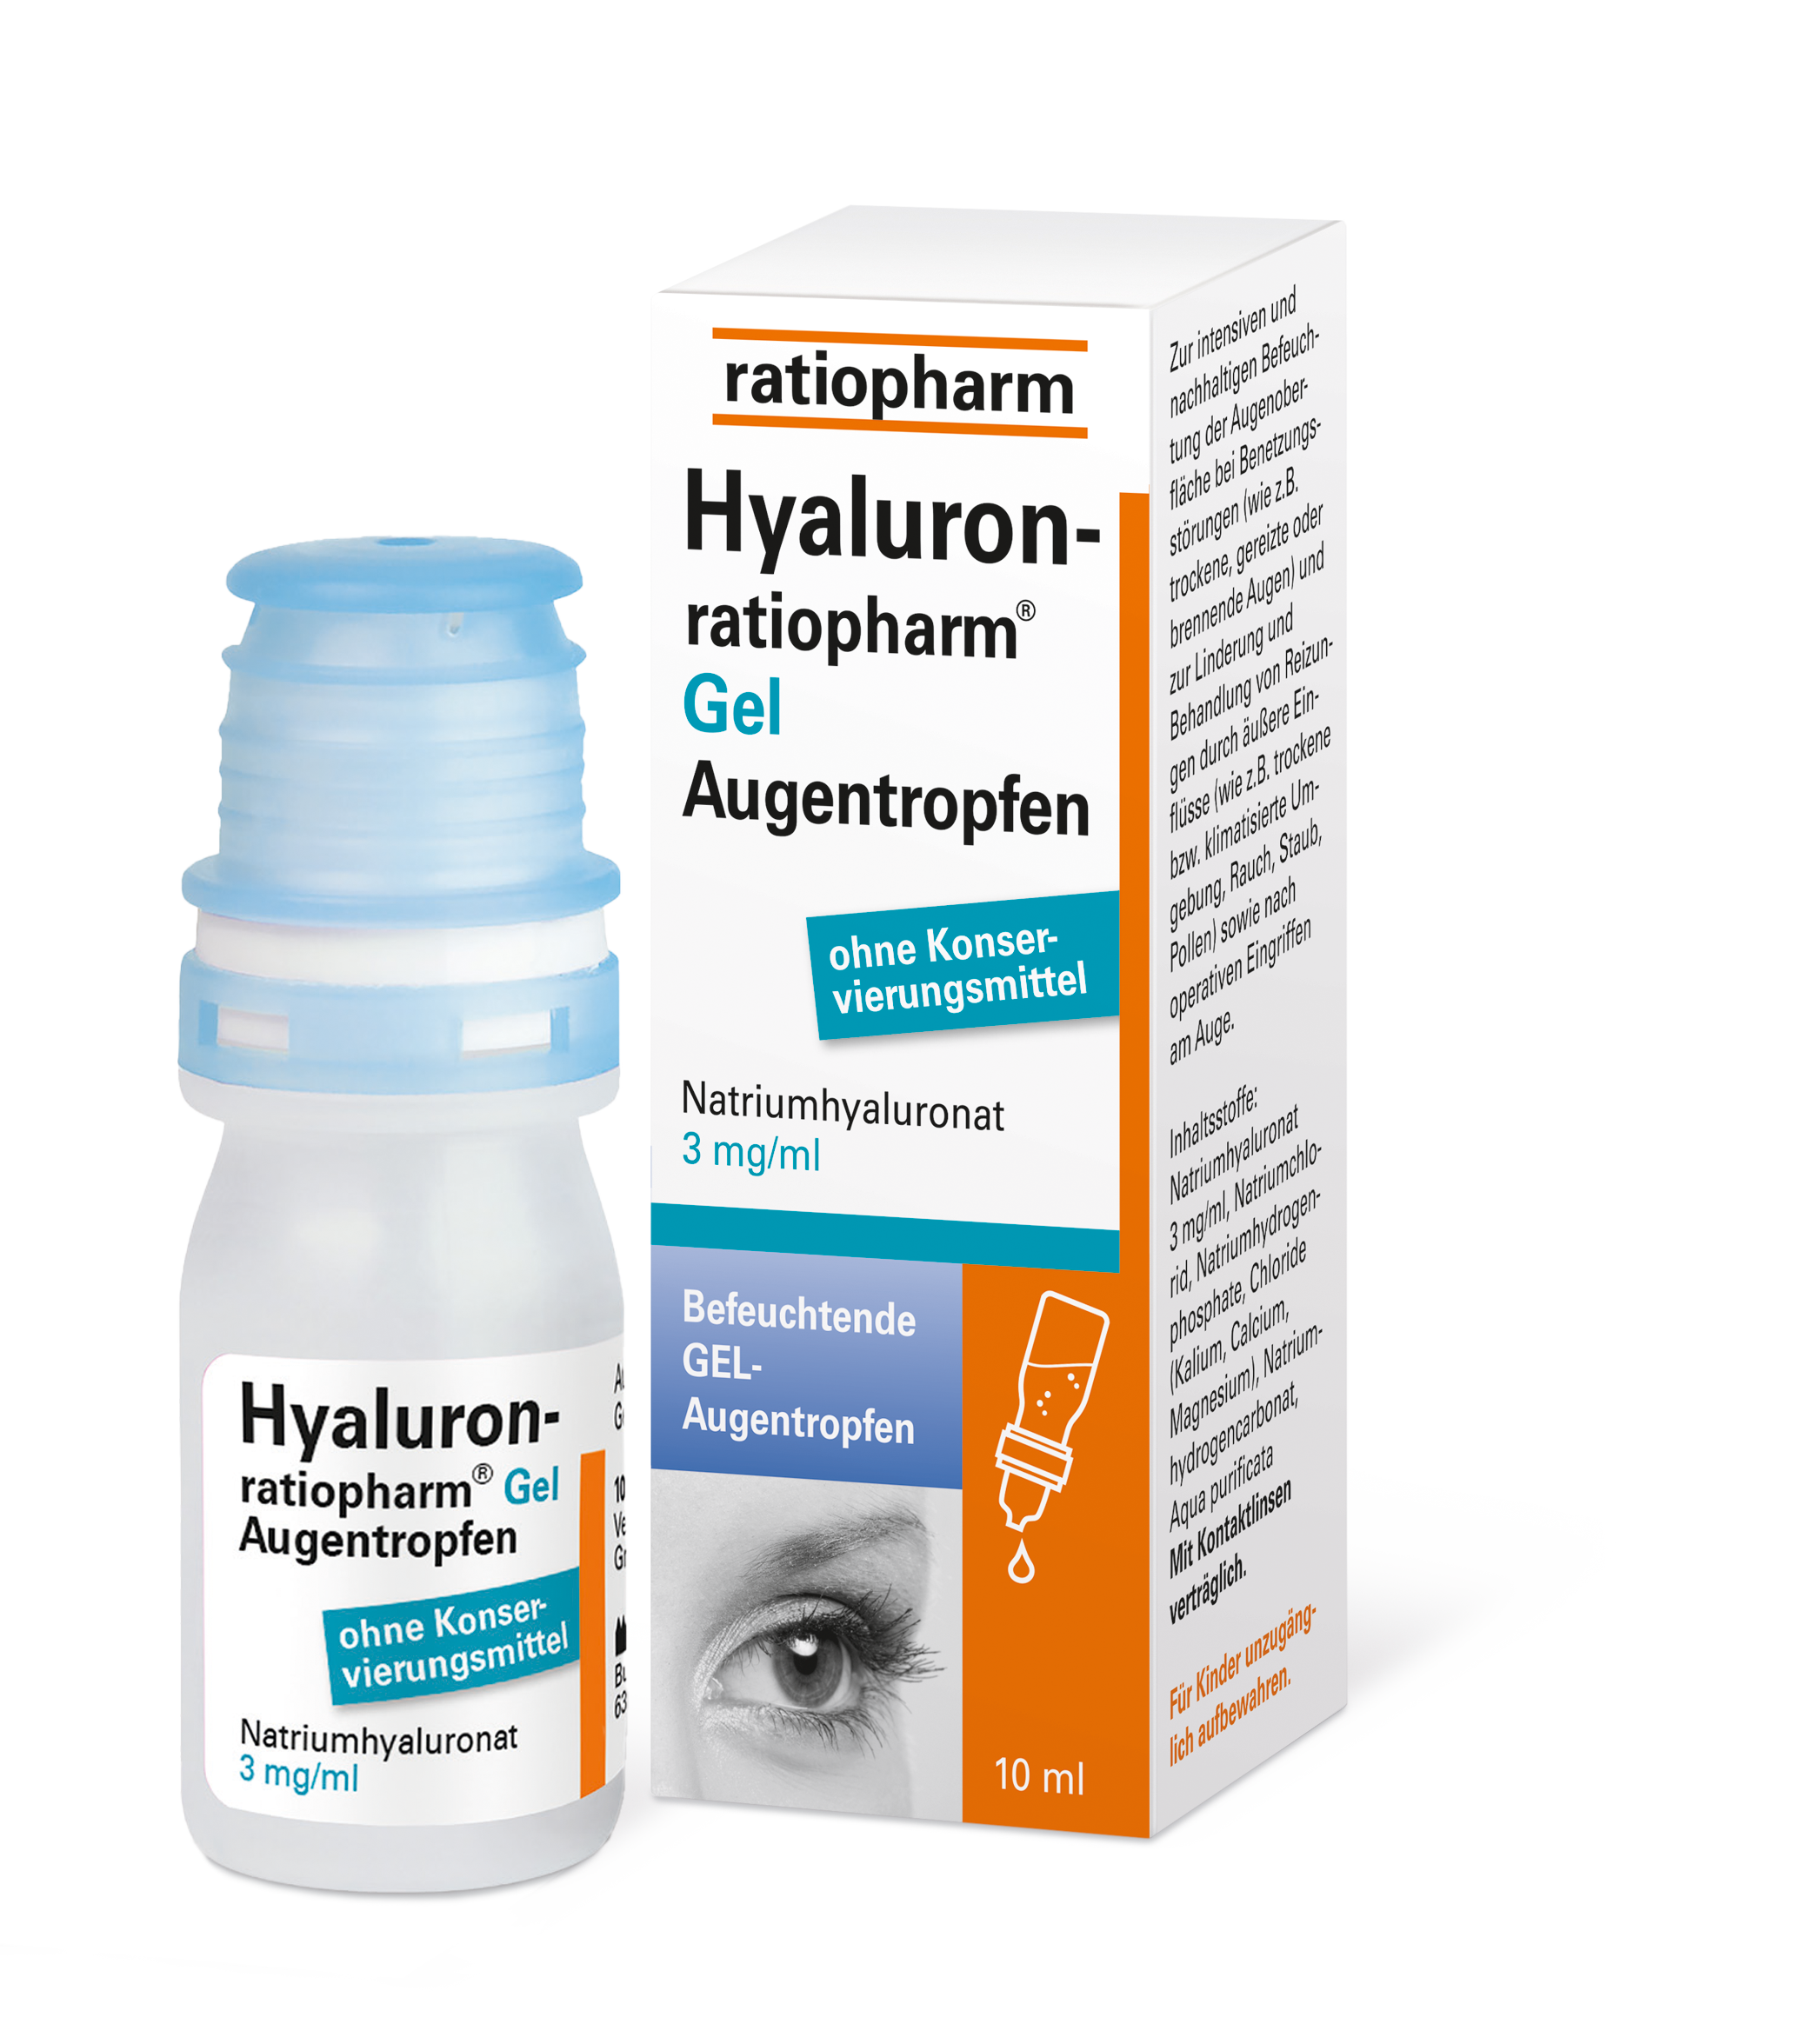 Hyaluron-ratiopharm® Gel Augentropfen